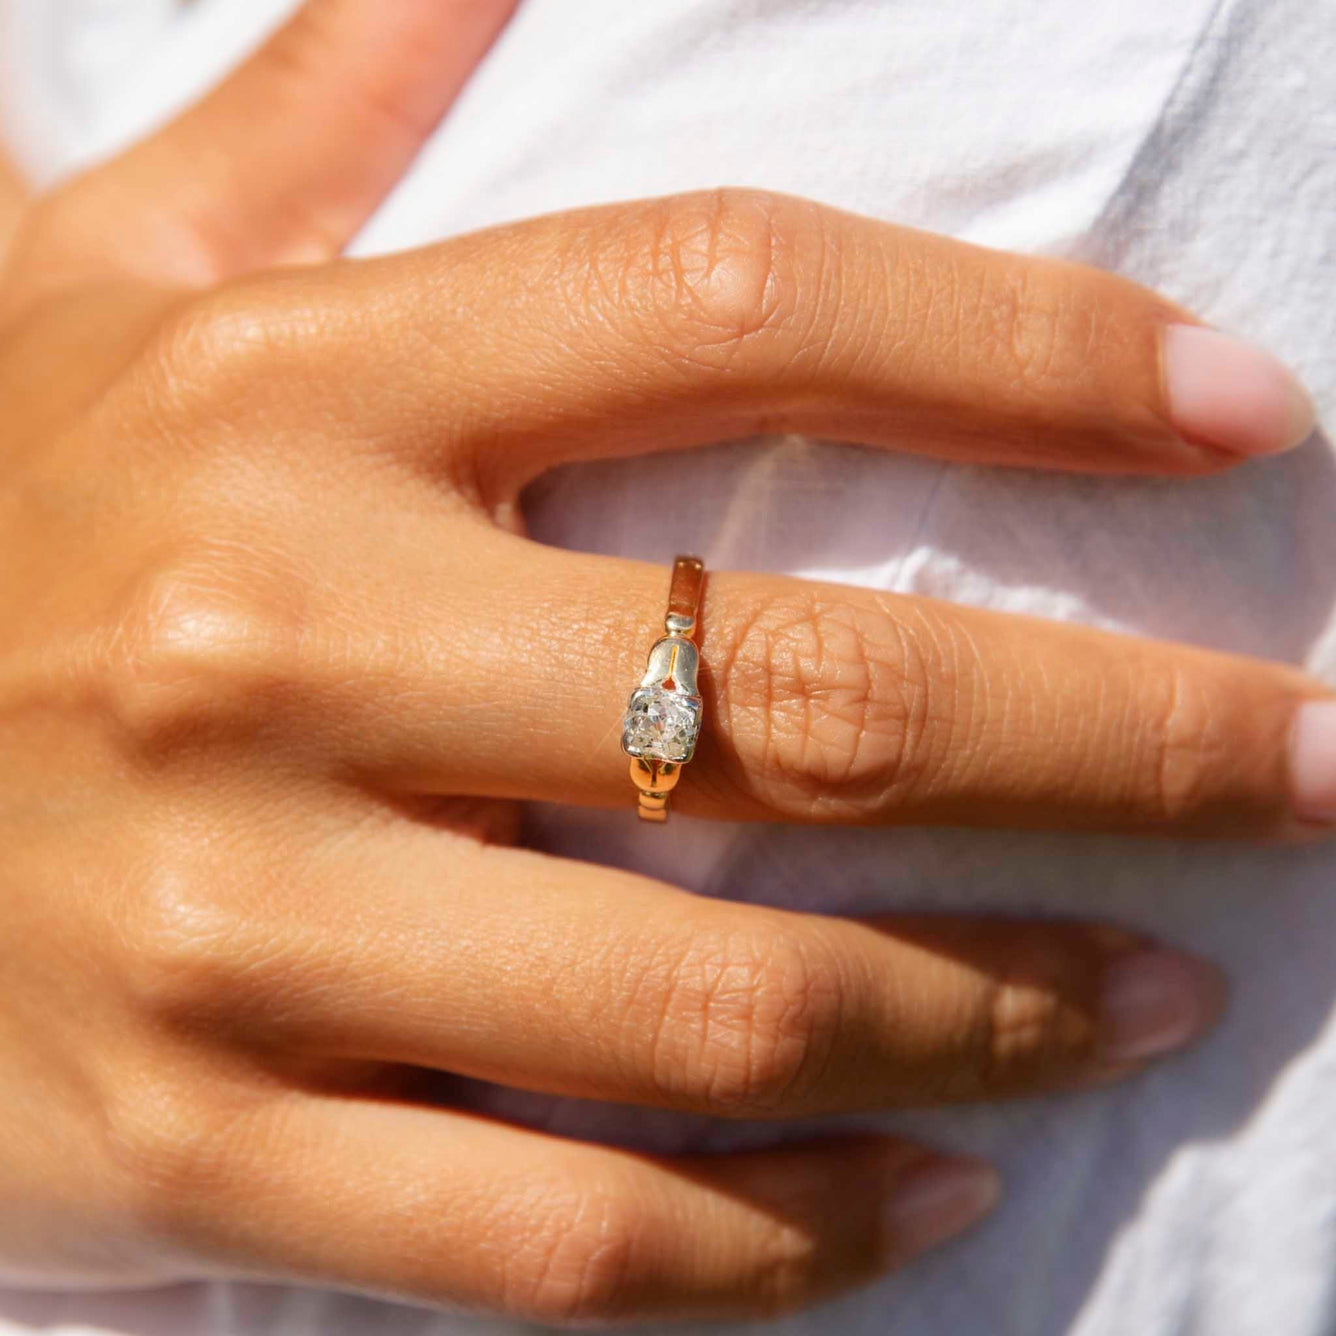 Buy Gentleman's Old Mine Cut Diamond Ring Online in India - Etsy